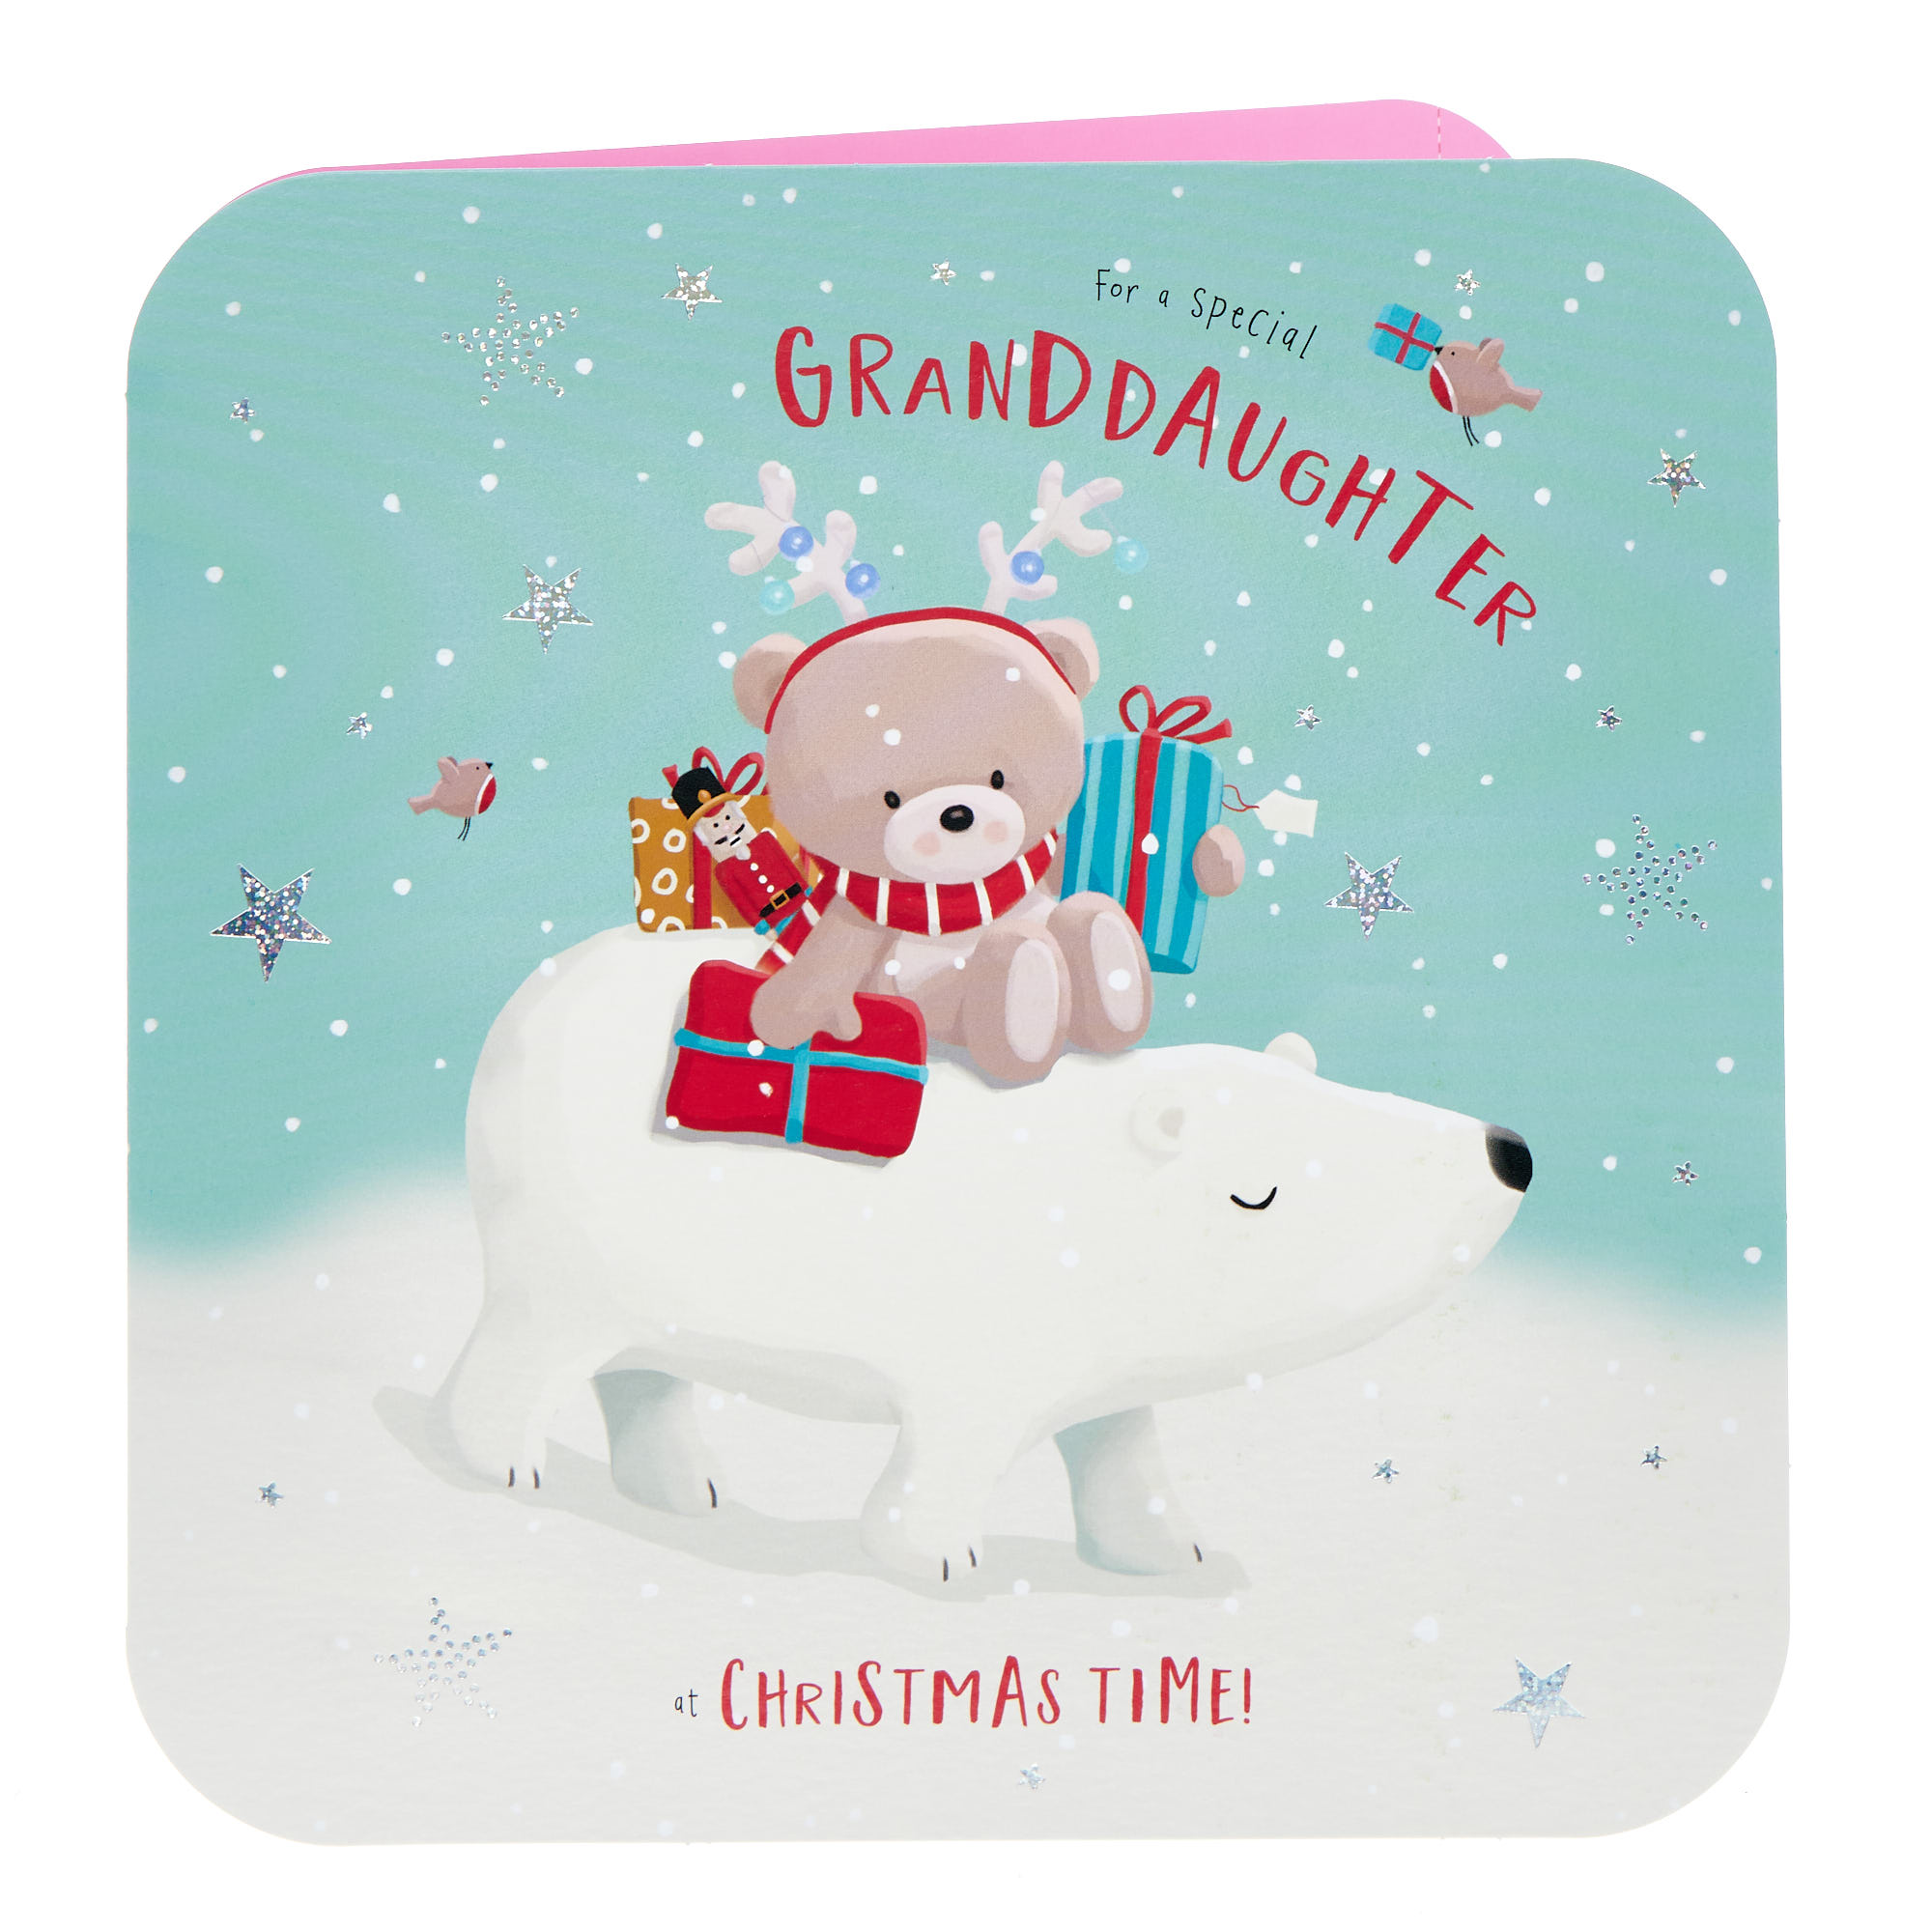 Granddaughter Hugs Polar Bear Christmas Card